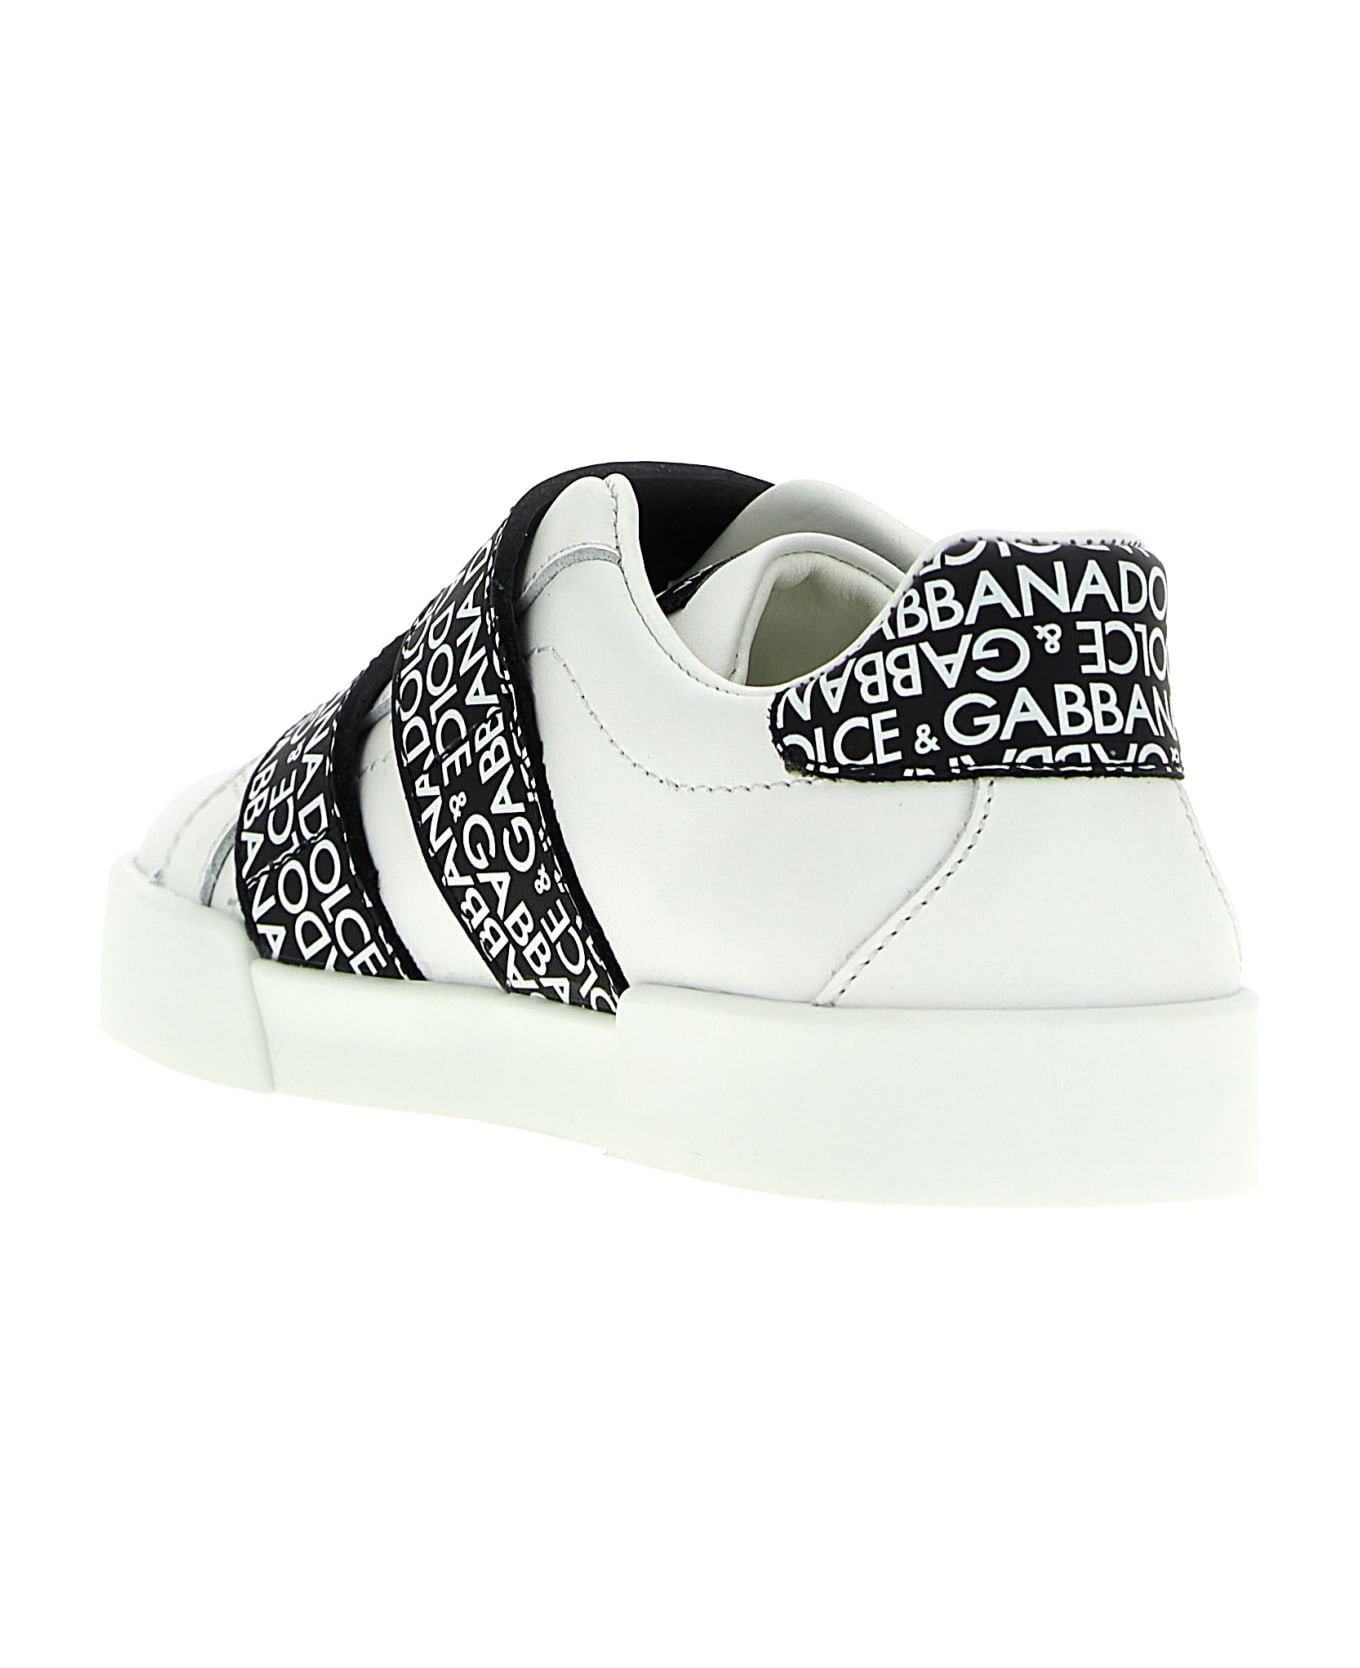 Dolce & Gabbana 'portofino' Sneakers - White/Black